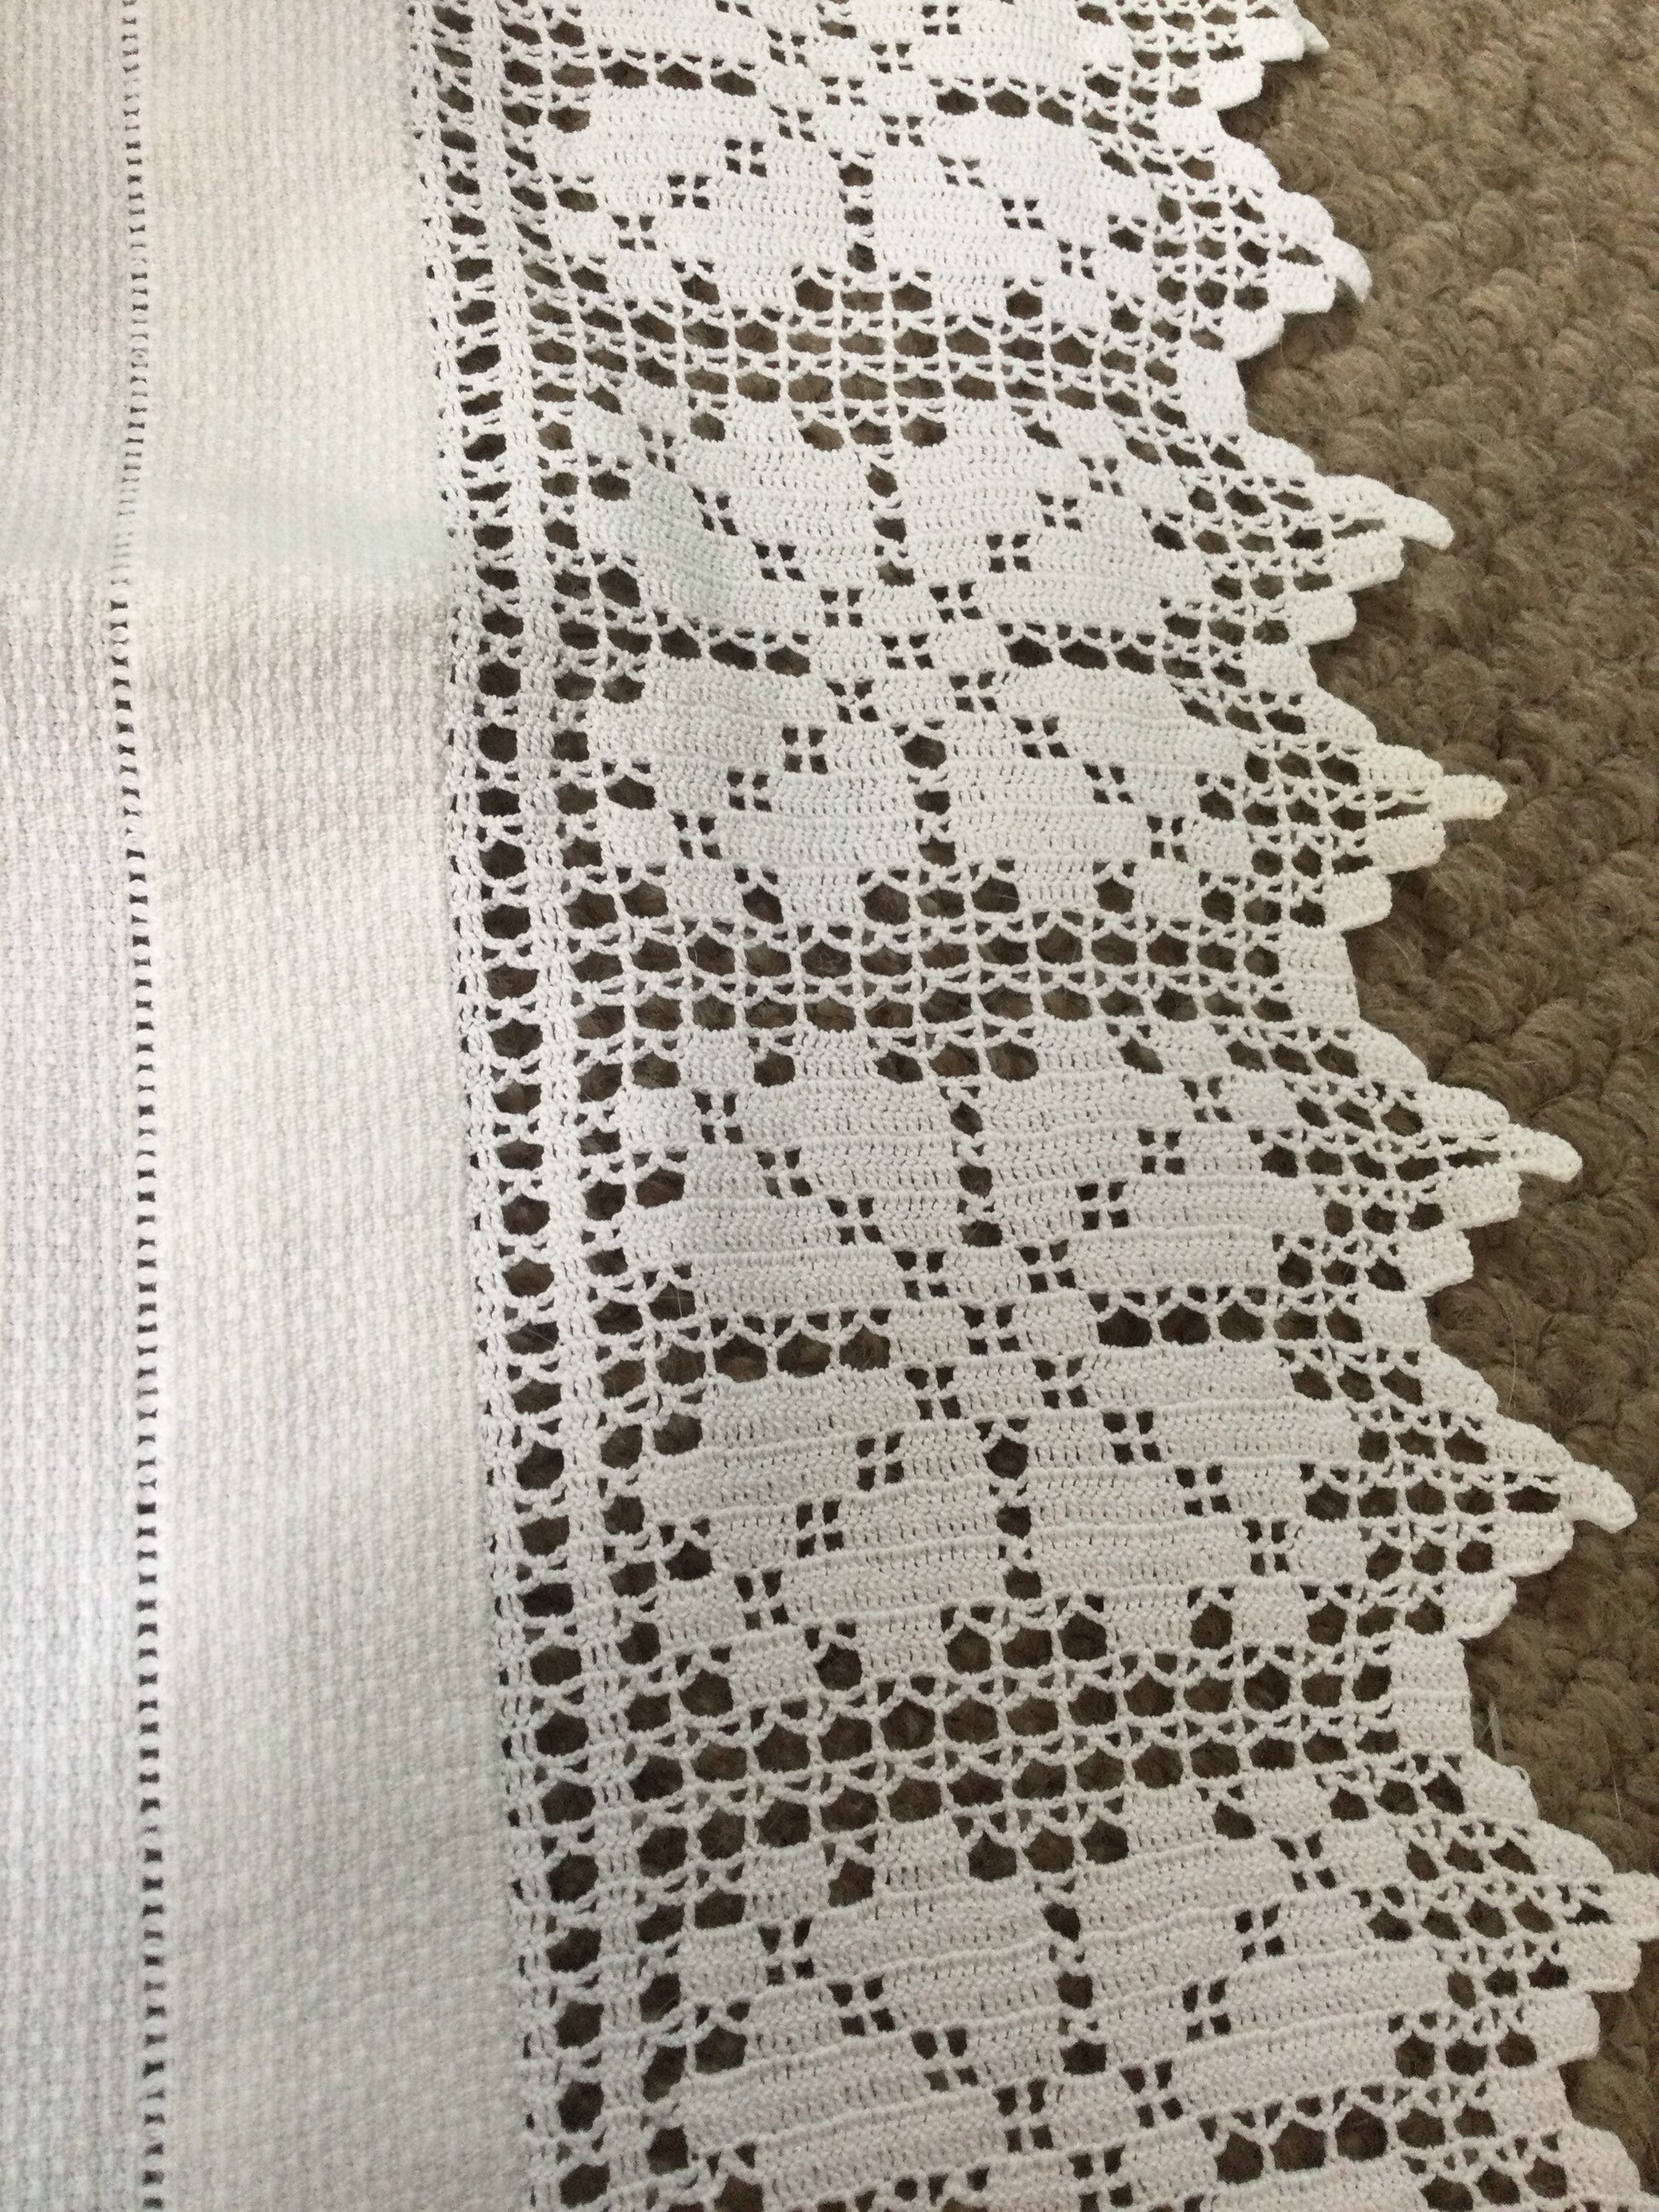 50 x 25” crisp textured linen white Vintage crochet edge long tablecloth lacework embroidered floral runner